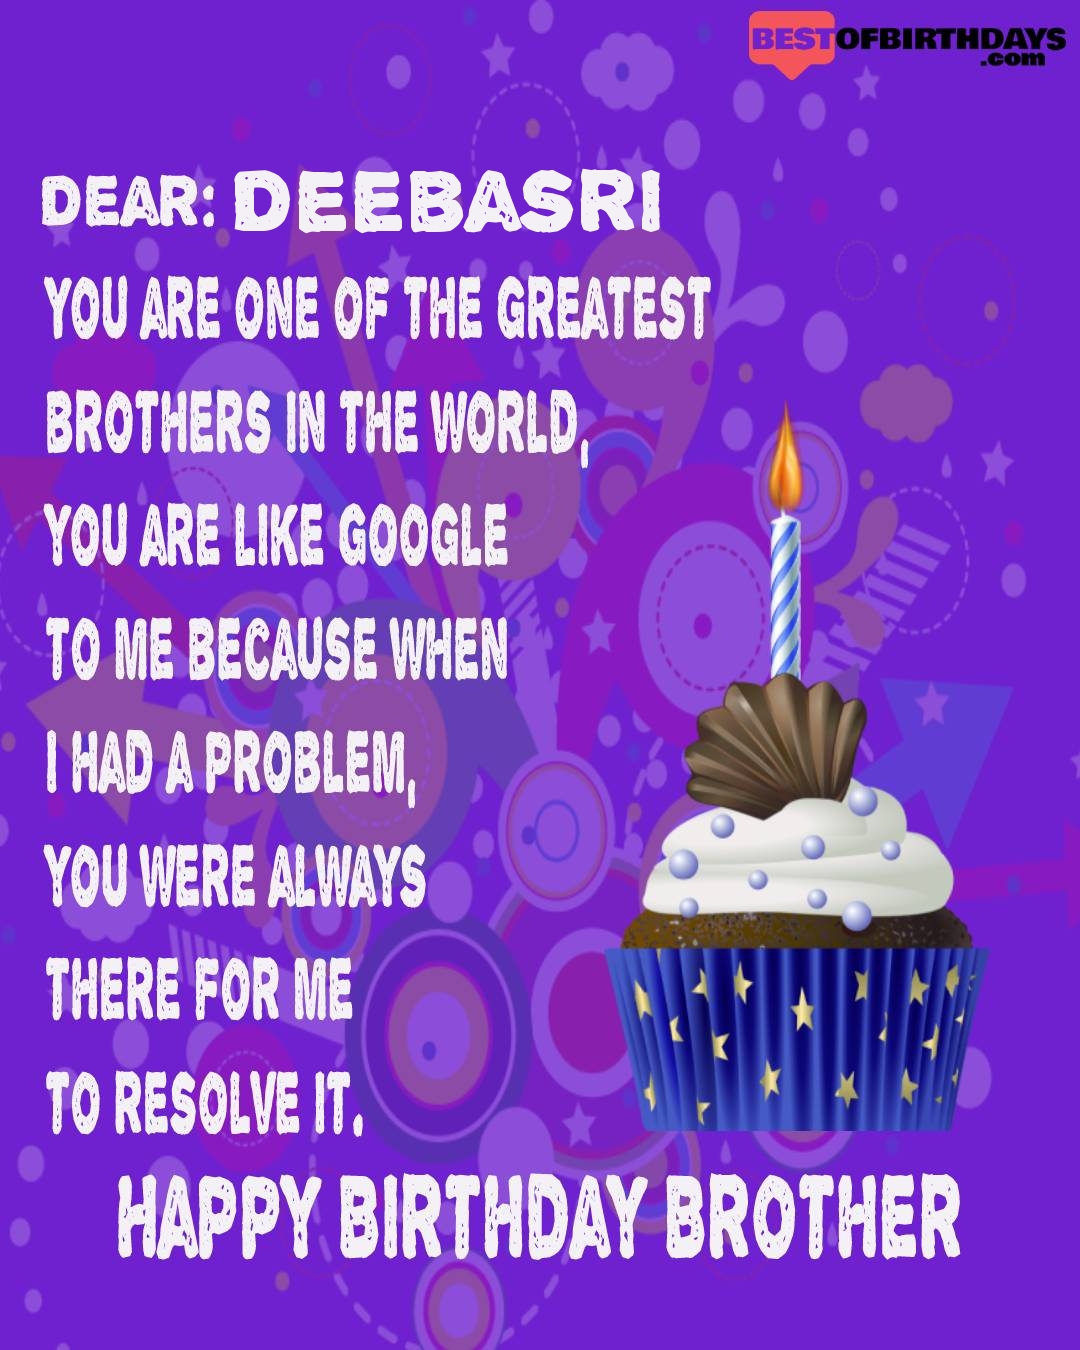 Happy birthday deebasri bhai brother bro